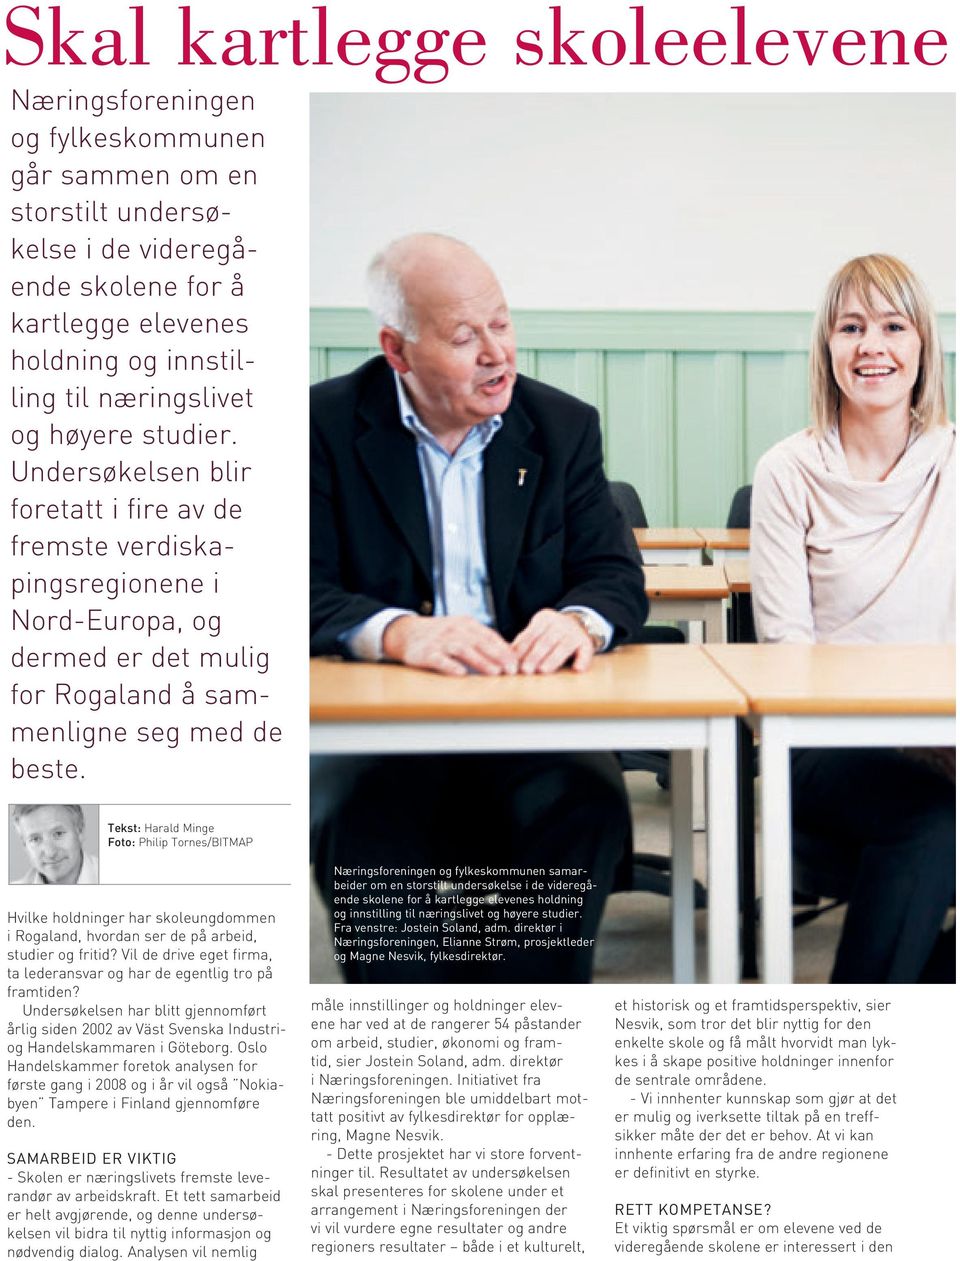 Tekst: Harald Minge Foto: Philip Tornes/BITMAP Hvilke holdninger har skoleungdommen i Rogaland, hvordan ser de på arbeid, studier og fritid?